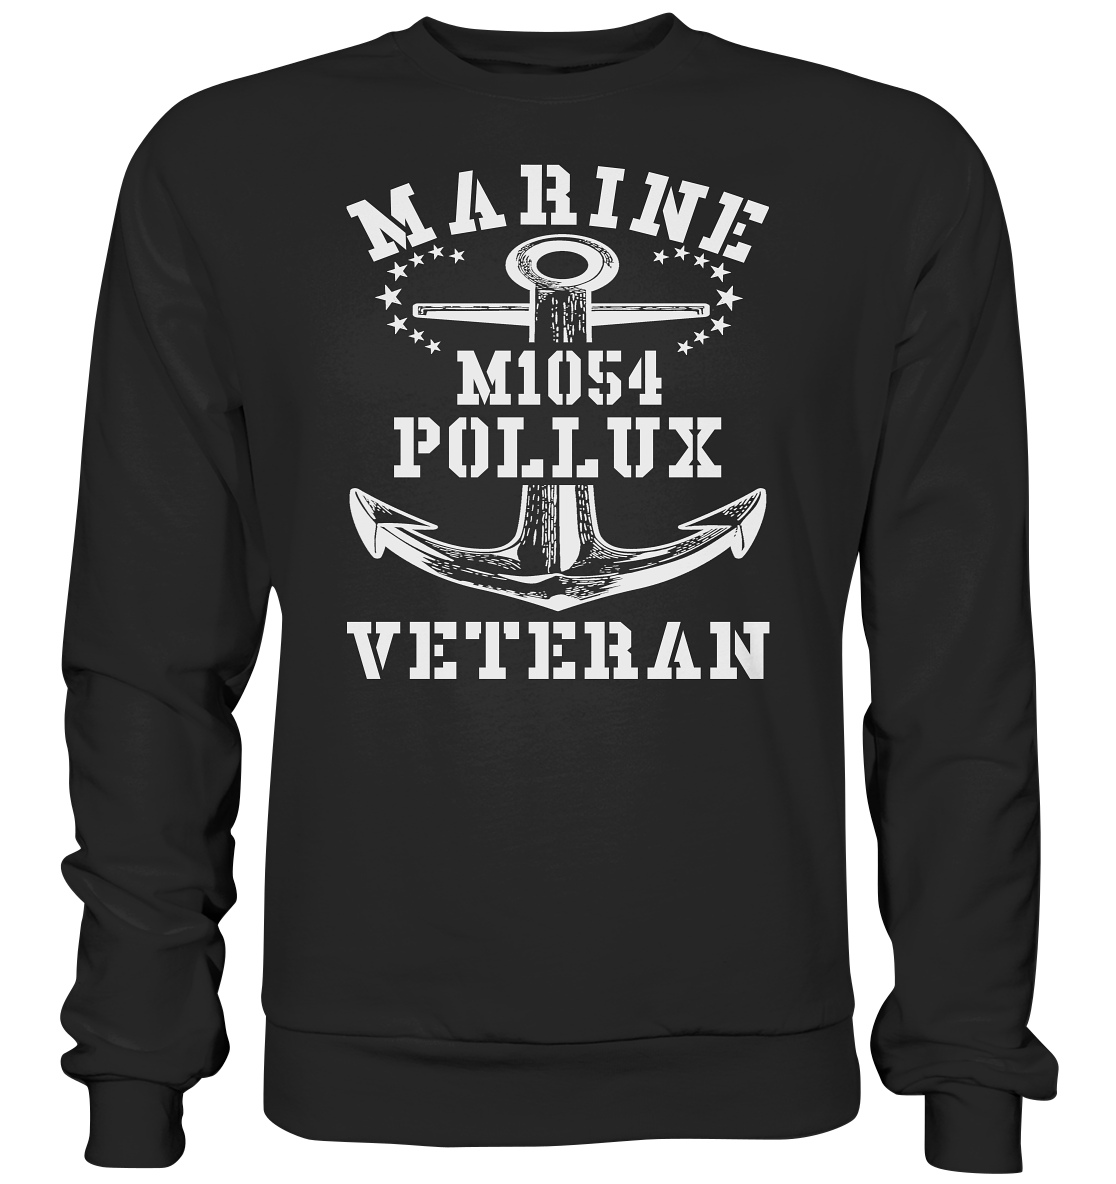 SM-Boot M1054 POLLUX Marine Veteran - Premium Sweatshirt